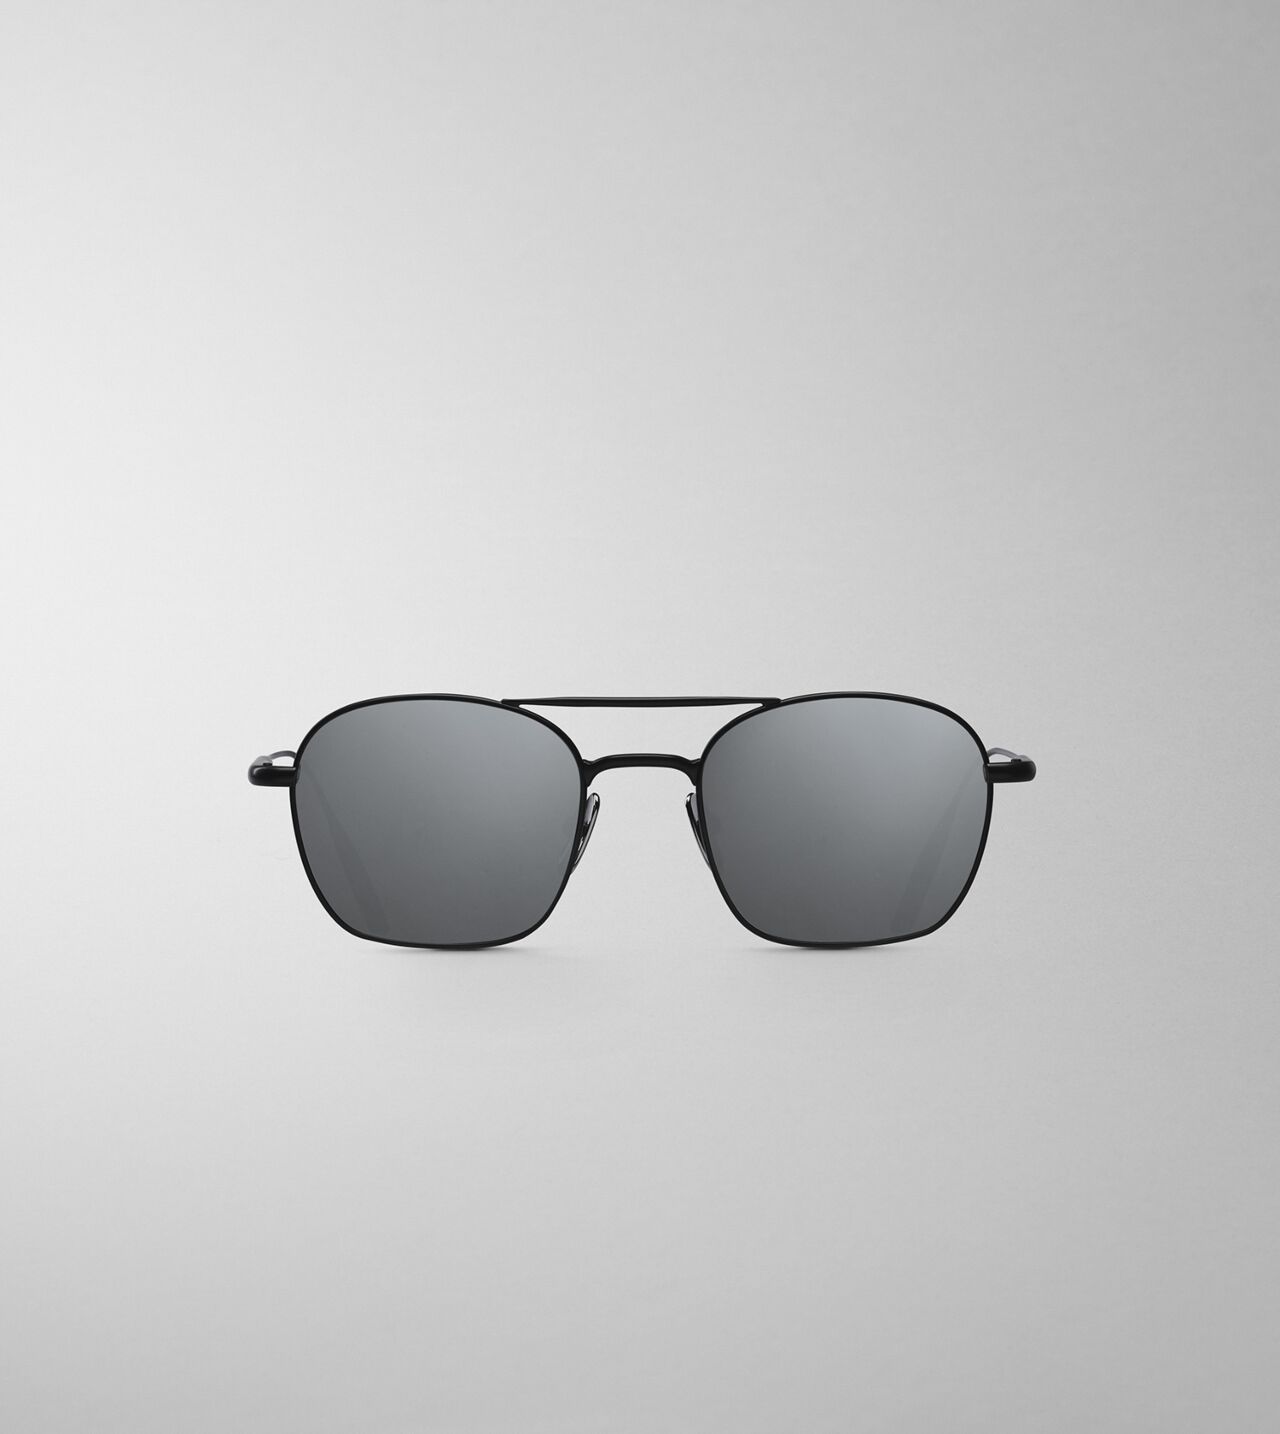 Maeda Sunglasses in Black grey mirror